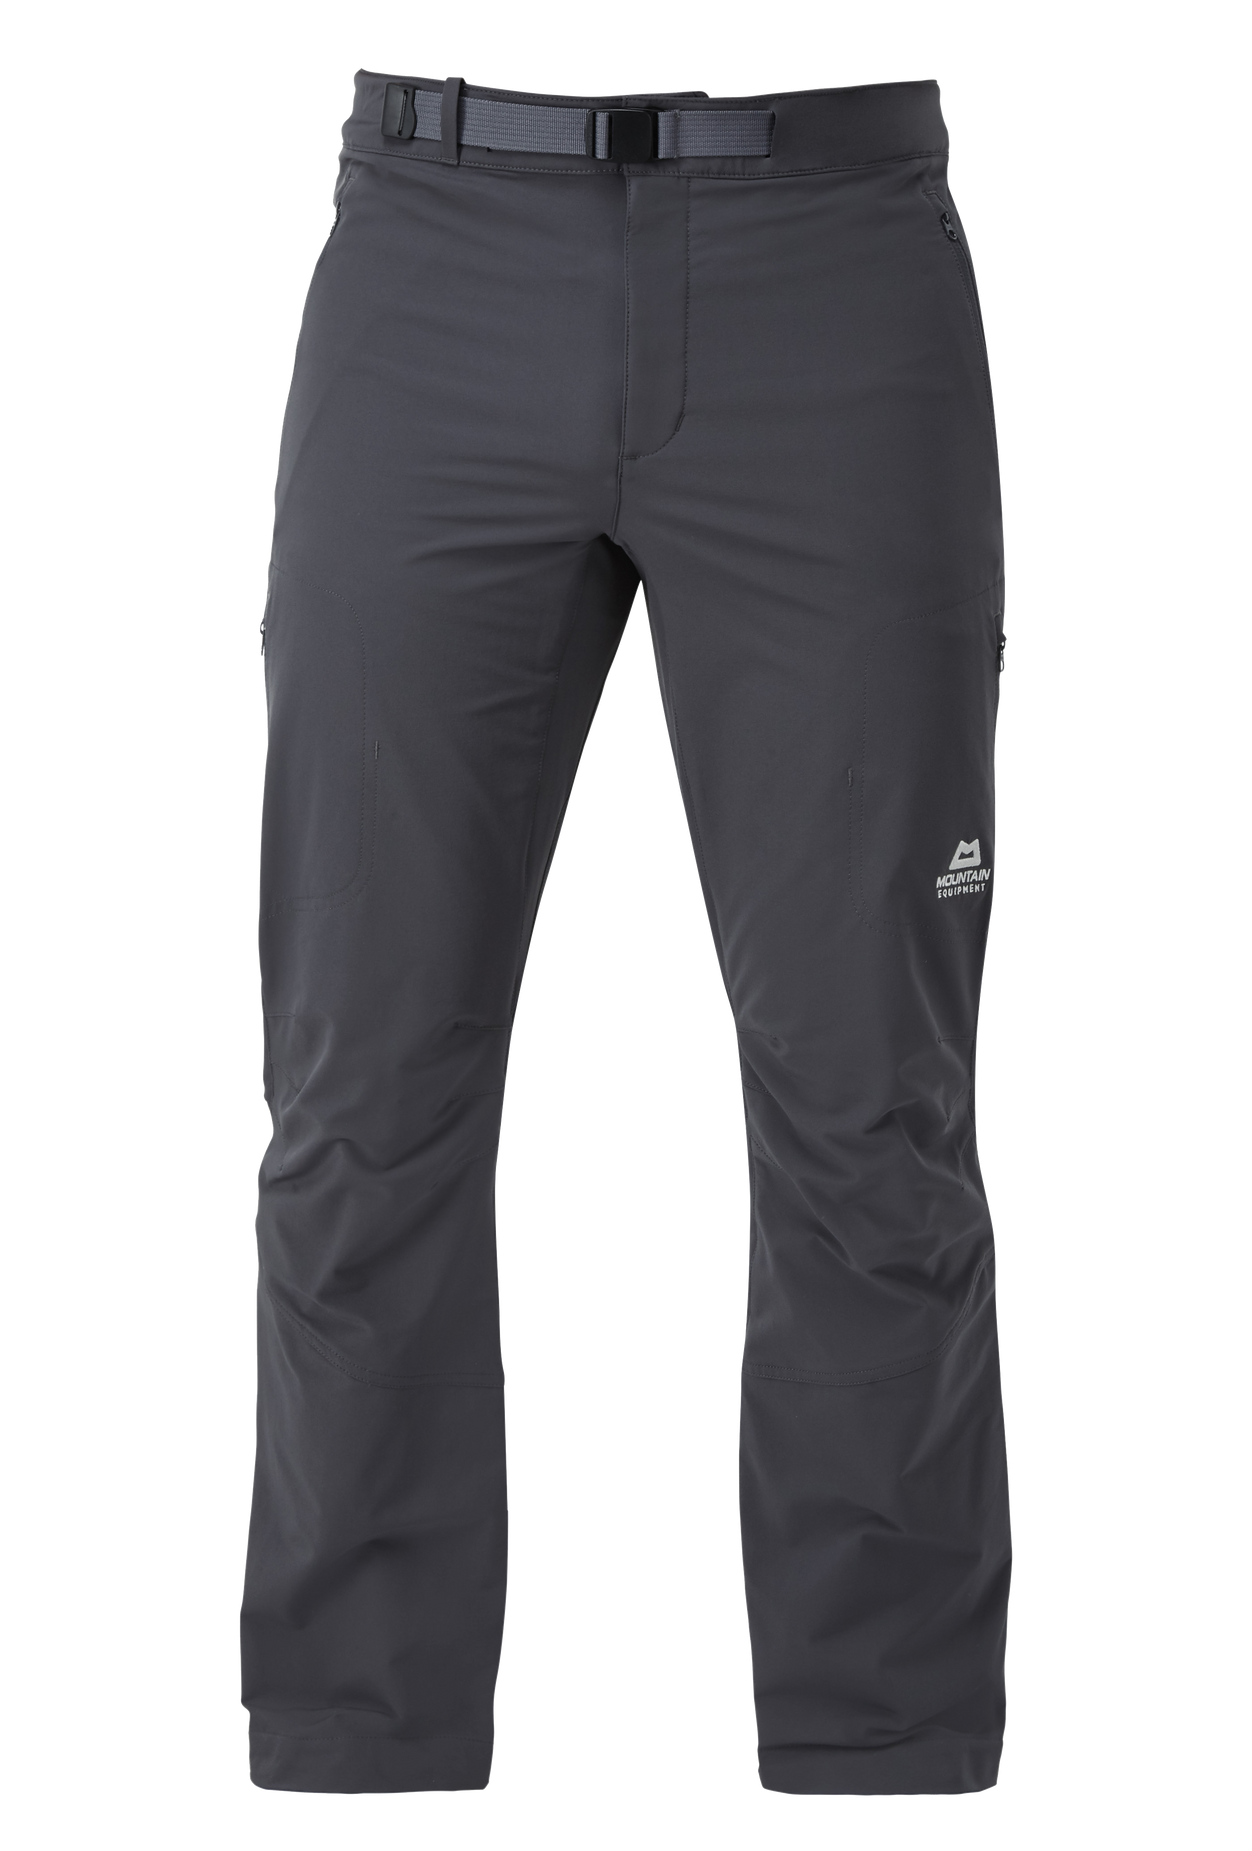 Mountain equipment pánské softshellové kalhoty Ibex Mountain Mens Pant - prodloužené Barva: Anvil Grey, Velikost: 34/L